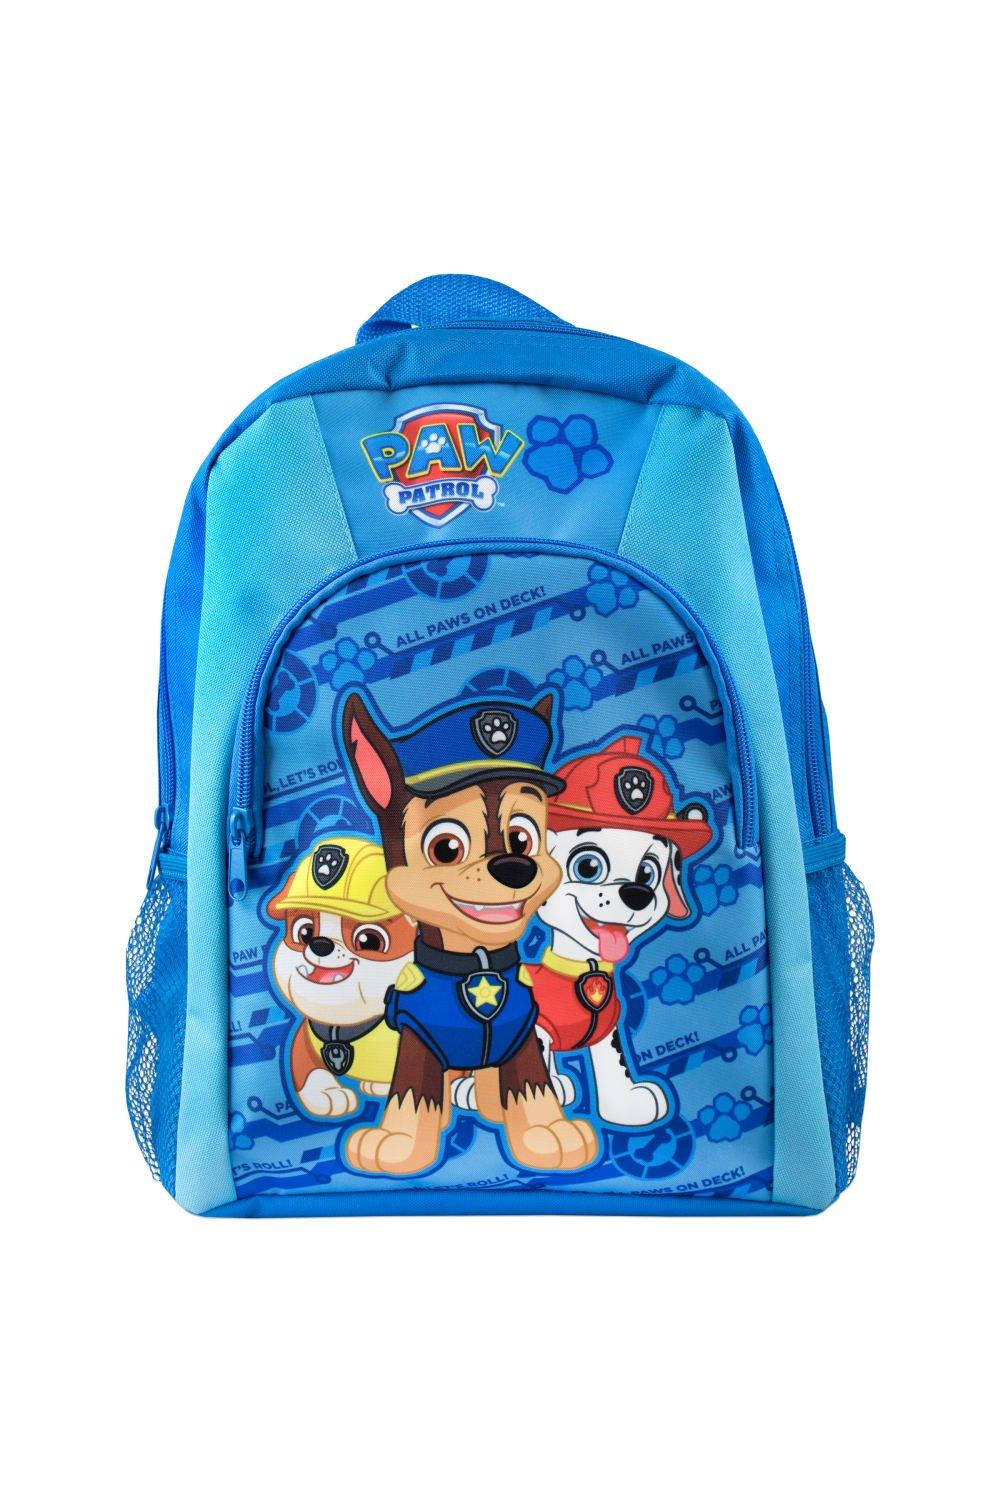 Детский рюкзак Paw Patrol, синий детский рюкзак paw patrol синий